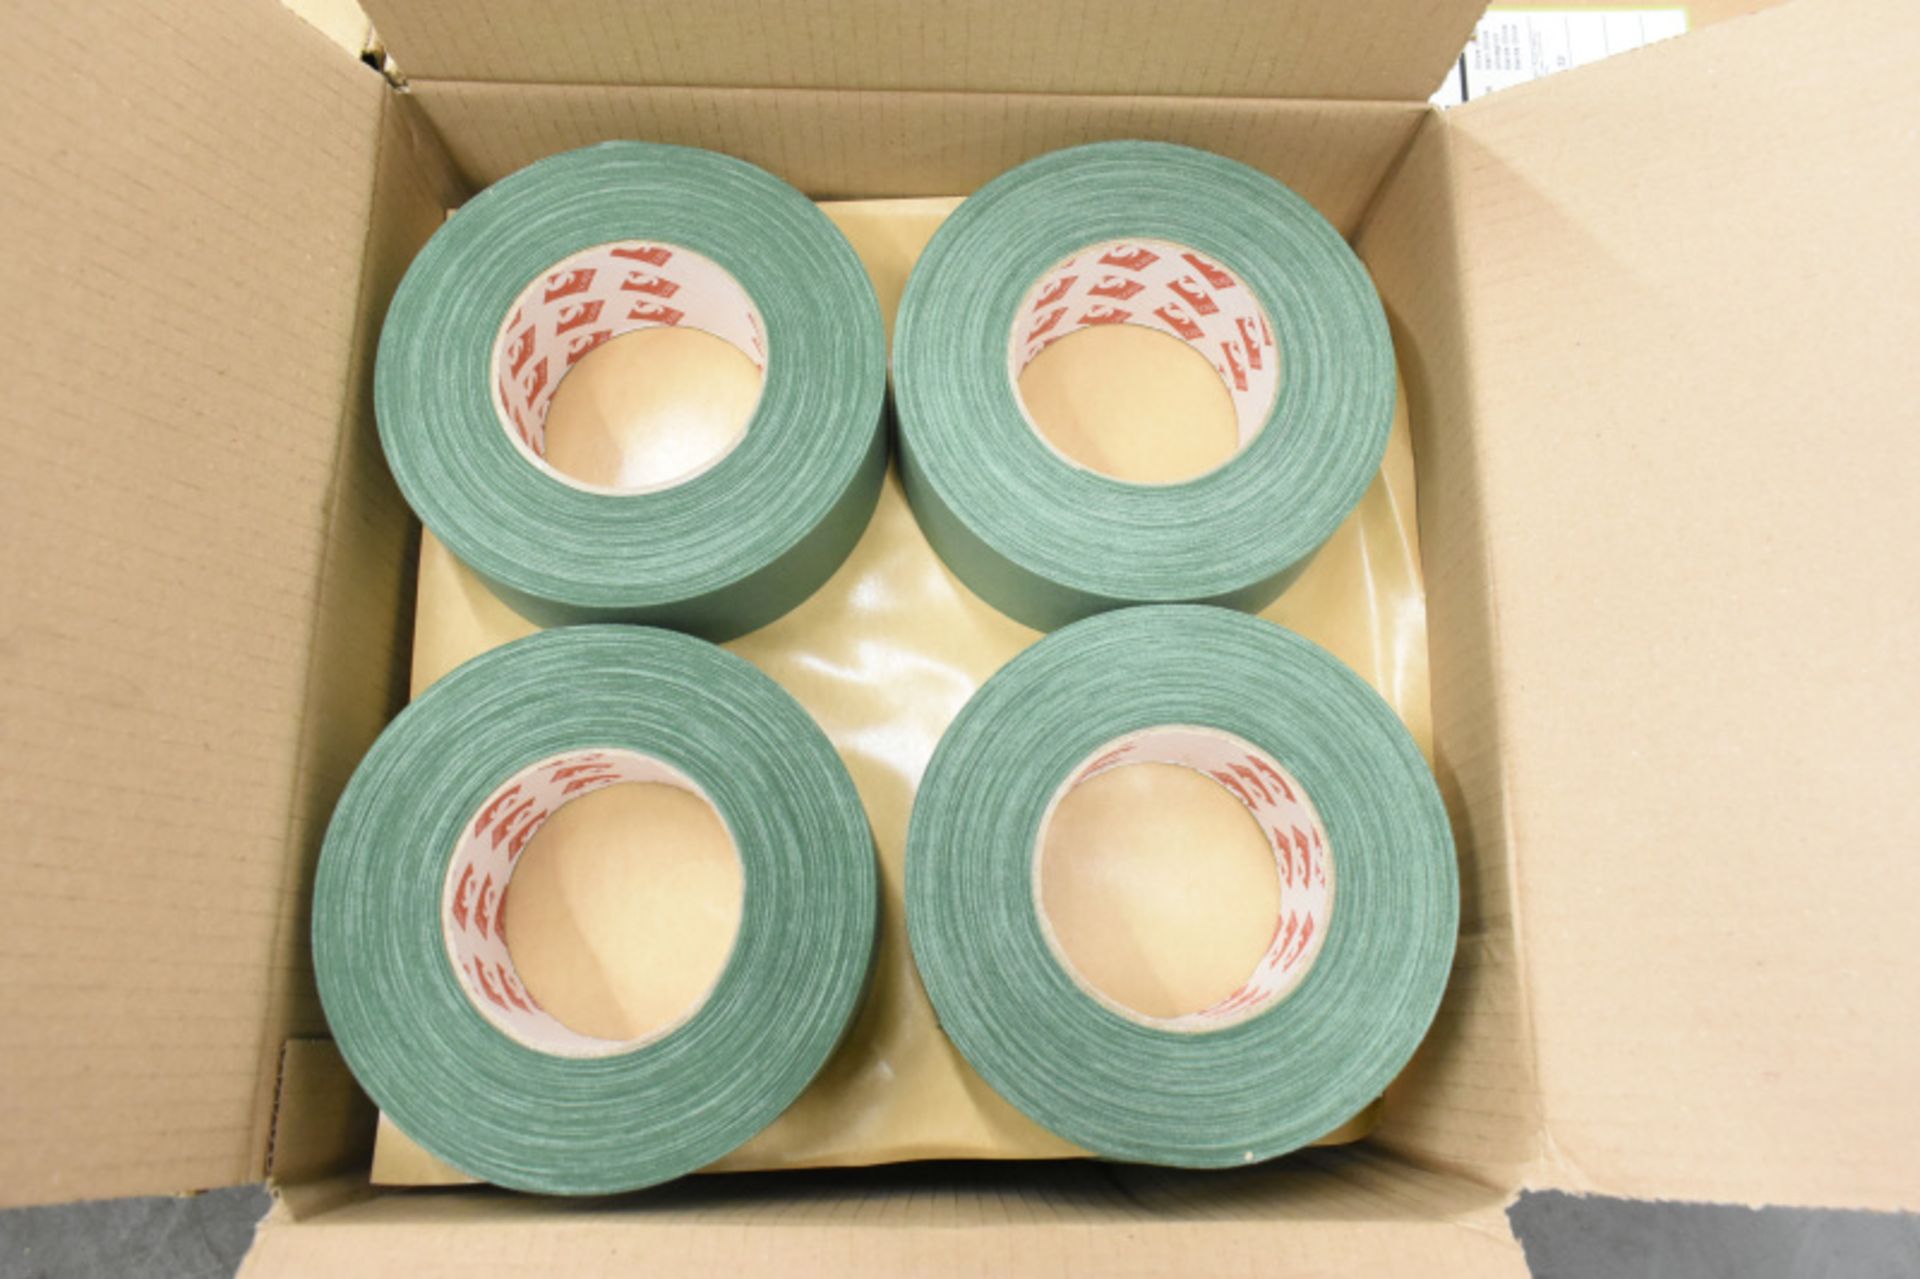 Scapa 3302 Pro Tape - Olive Green - 50mm x 50M rolls - 16 rolls per box - 1 box - manufactured 01/03 - Image 2 of 4